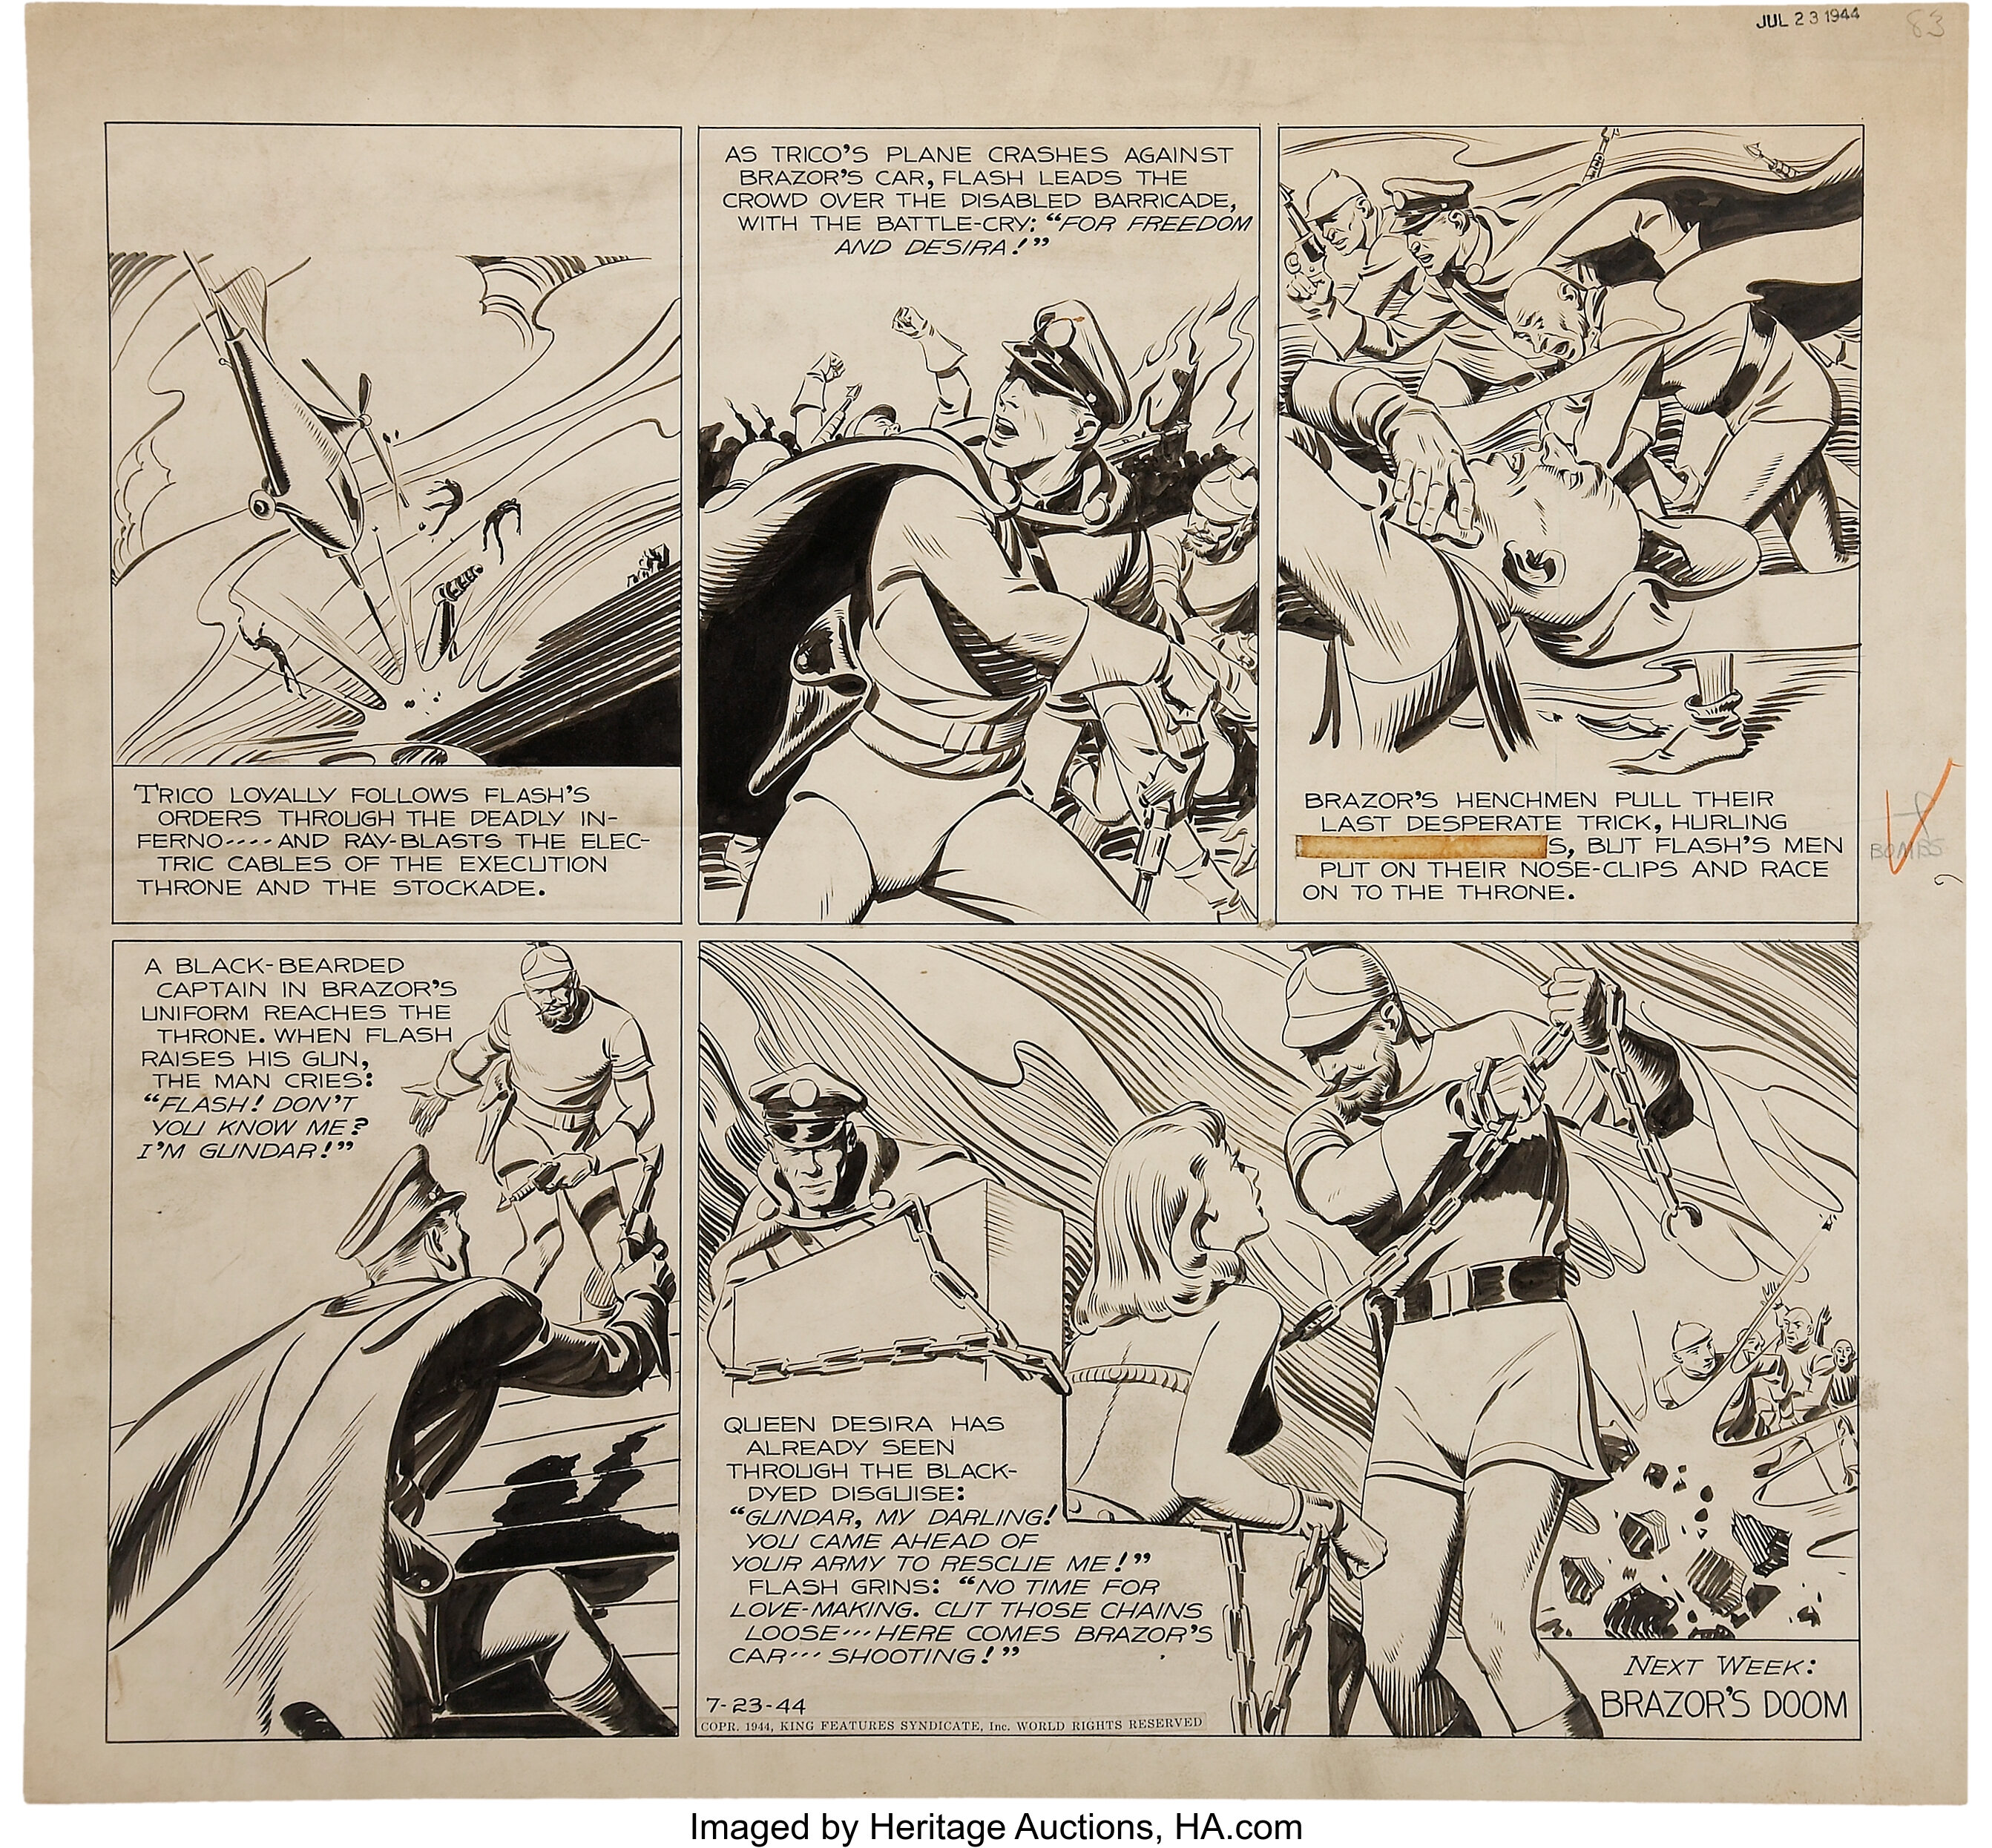 Original 'Flash Gordon' comic strip art headed to auction - The Boston Globe